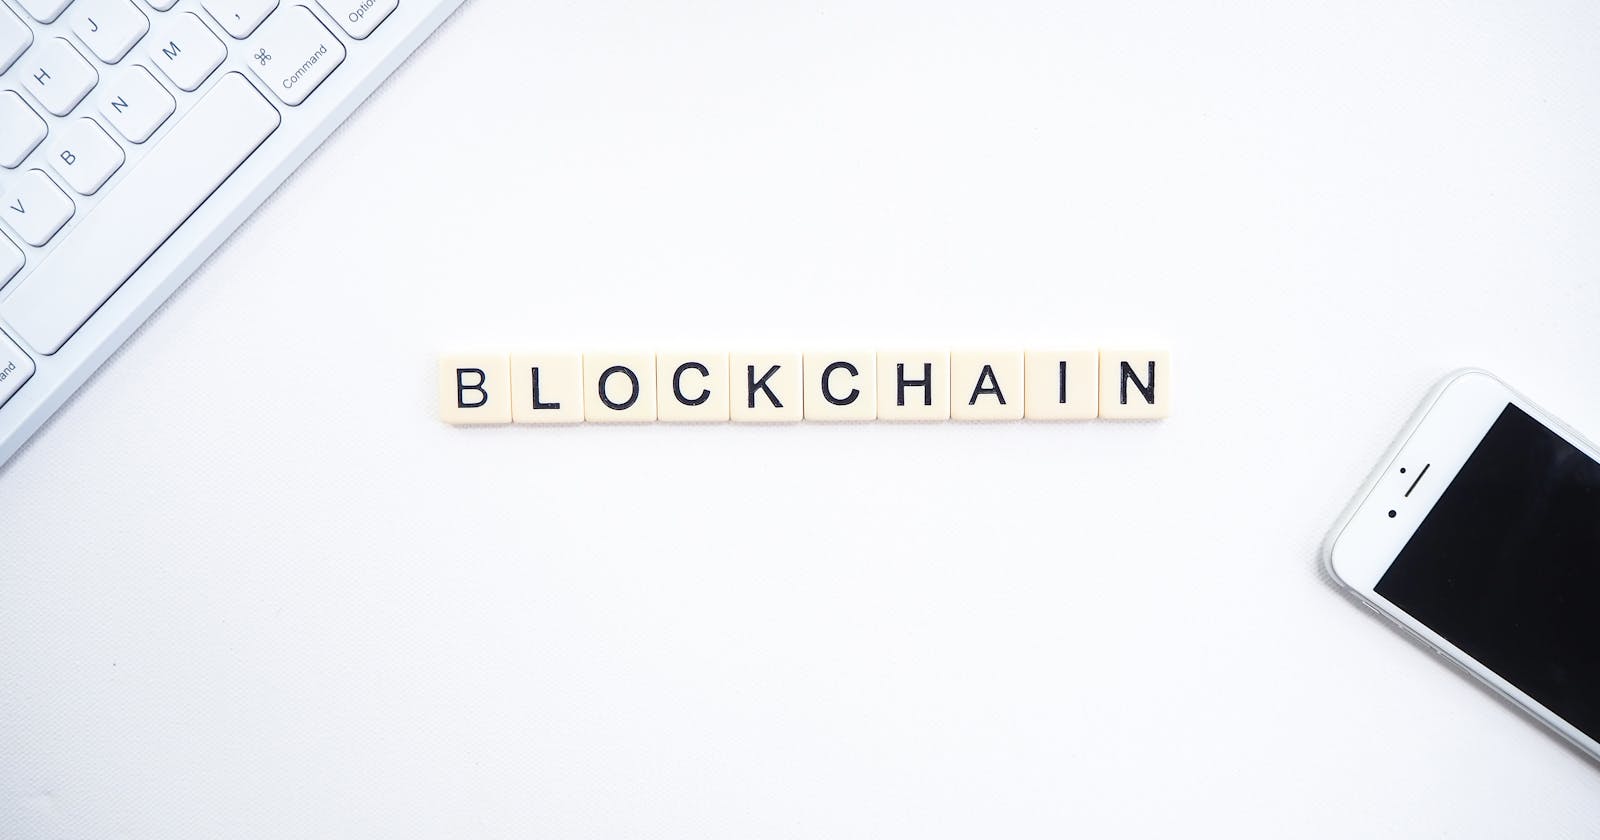 A Byte of Blockchain - Week 5
What is Blockchain?